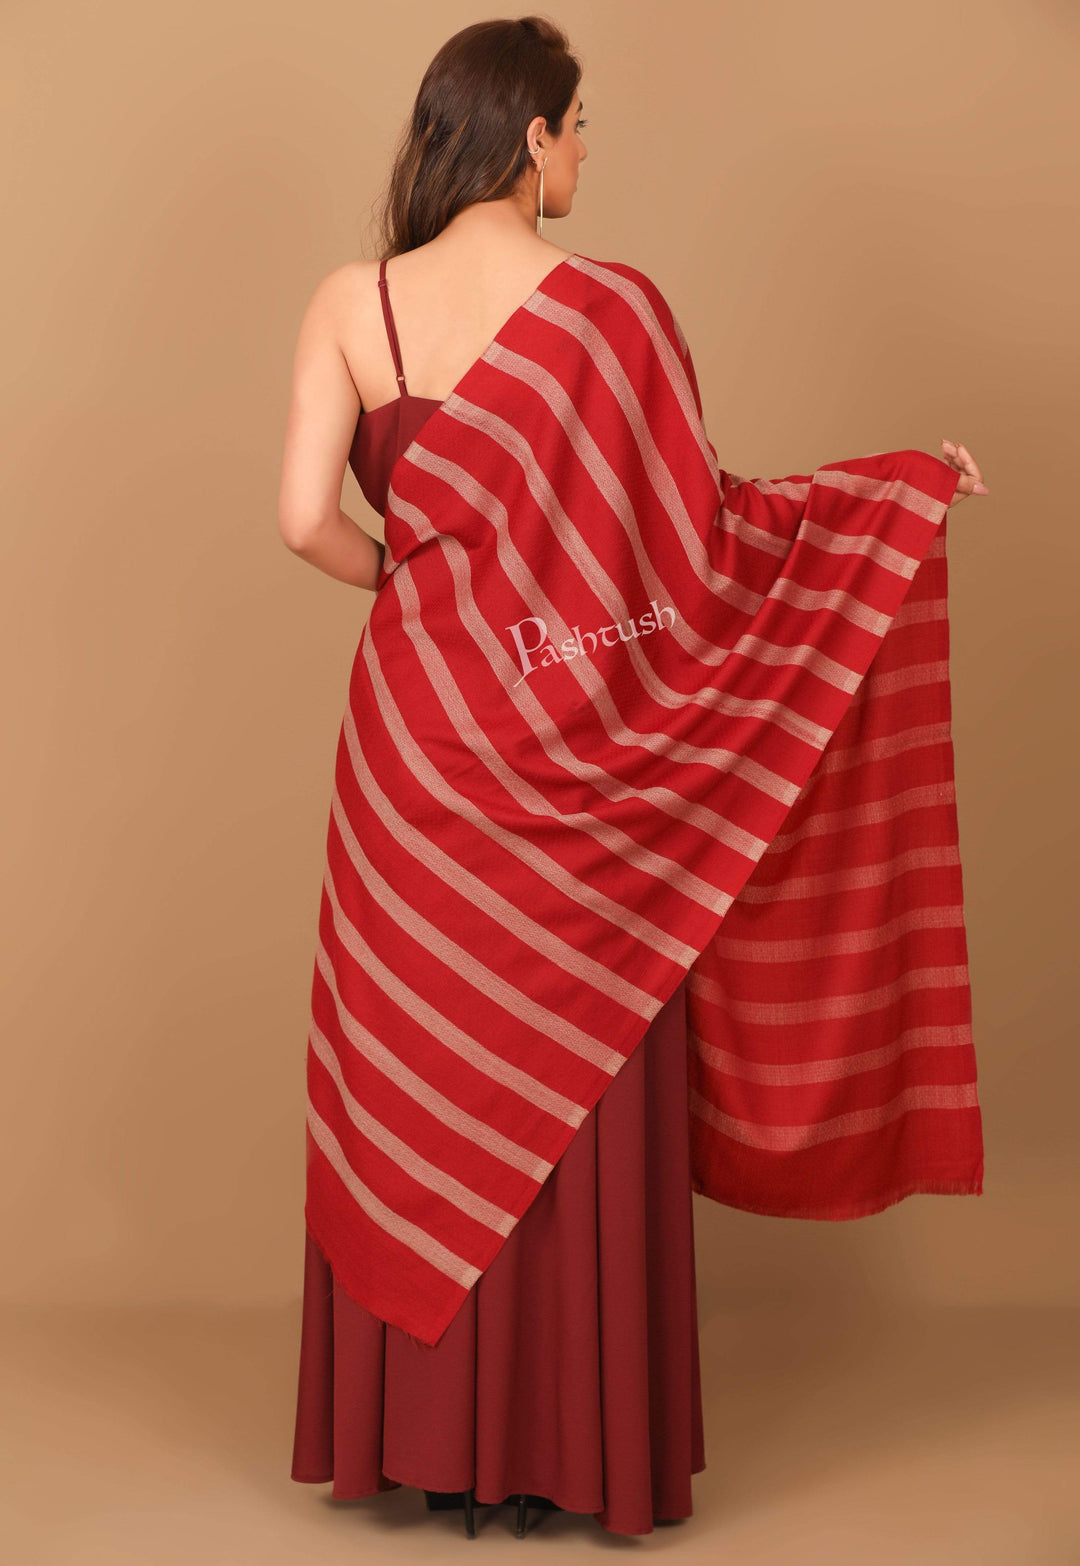 Pashtush India 70x200 Pashutsh Womens Extra Fine Wool, Striped Woven Scarf, Crimson Maroon